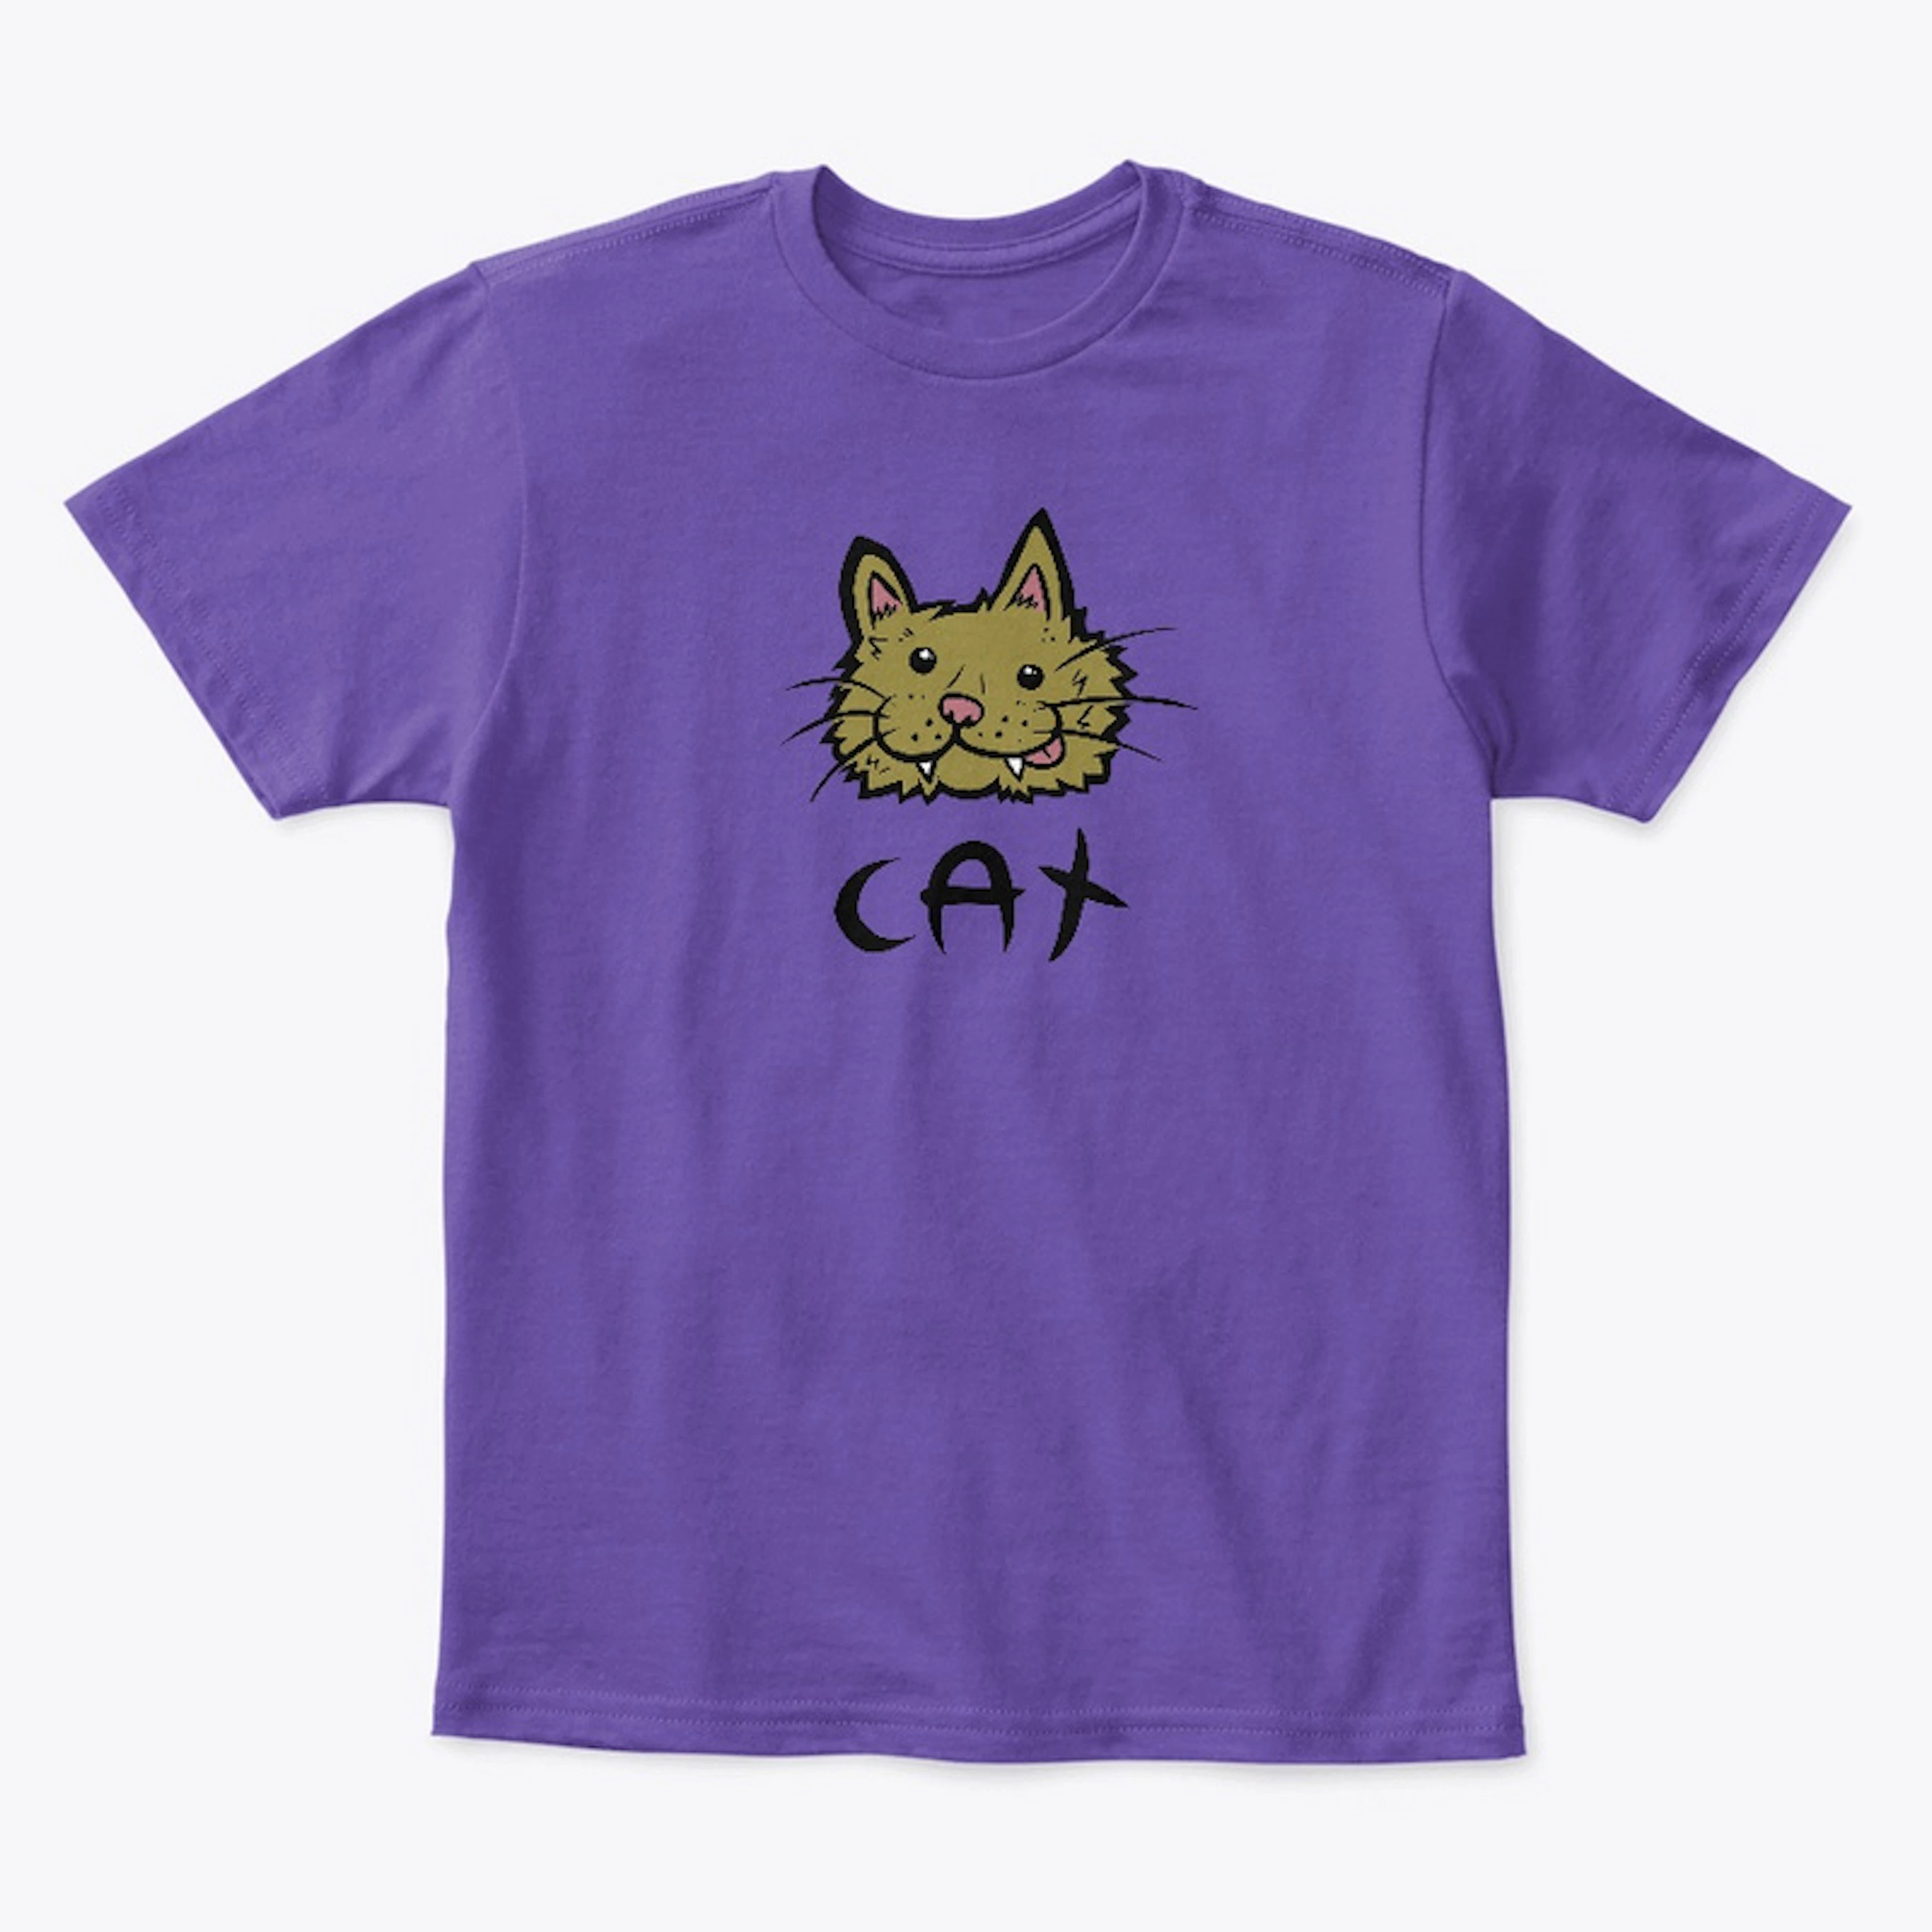 C-A-T Spells cat!